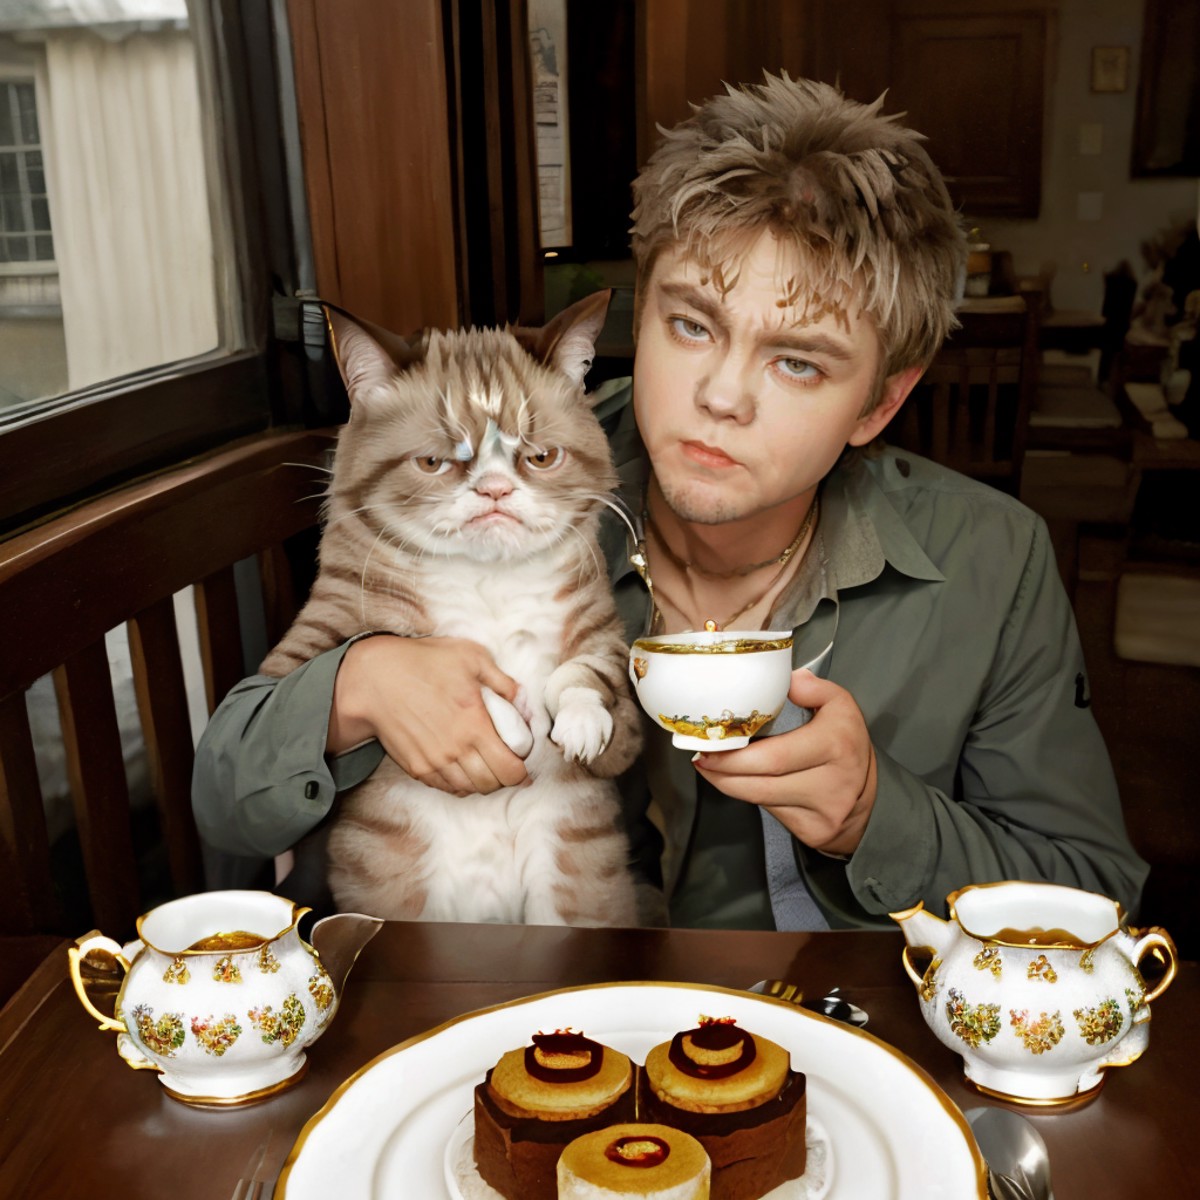 1man DG_ChadMM,having tea with ("Grumpy Cat"),
<lora:dg_ChadMMv1:0.8>,